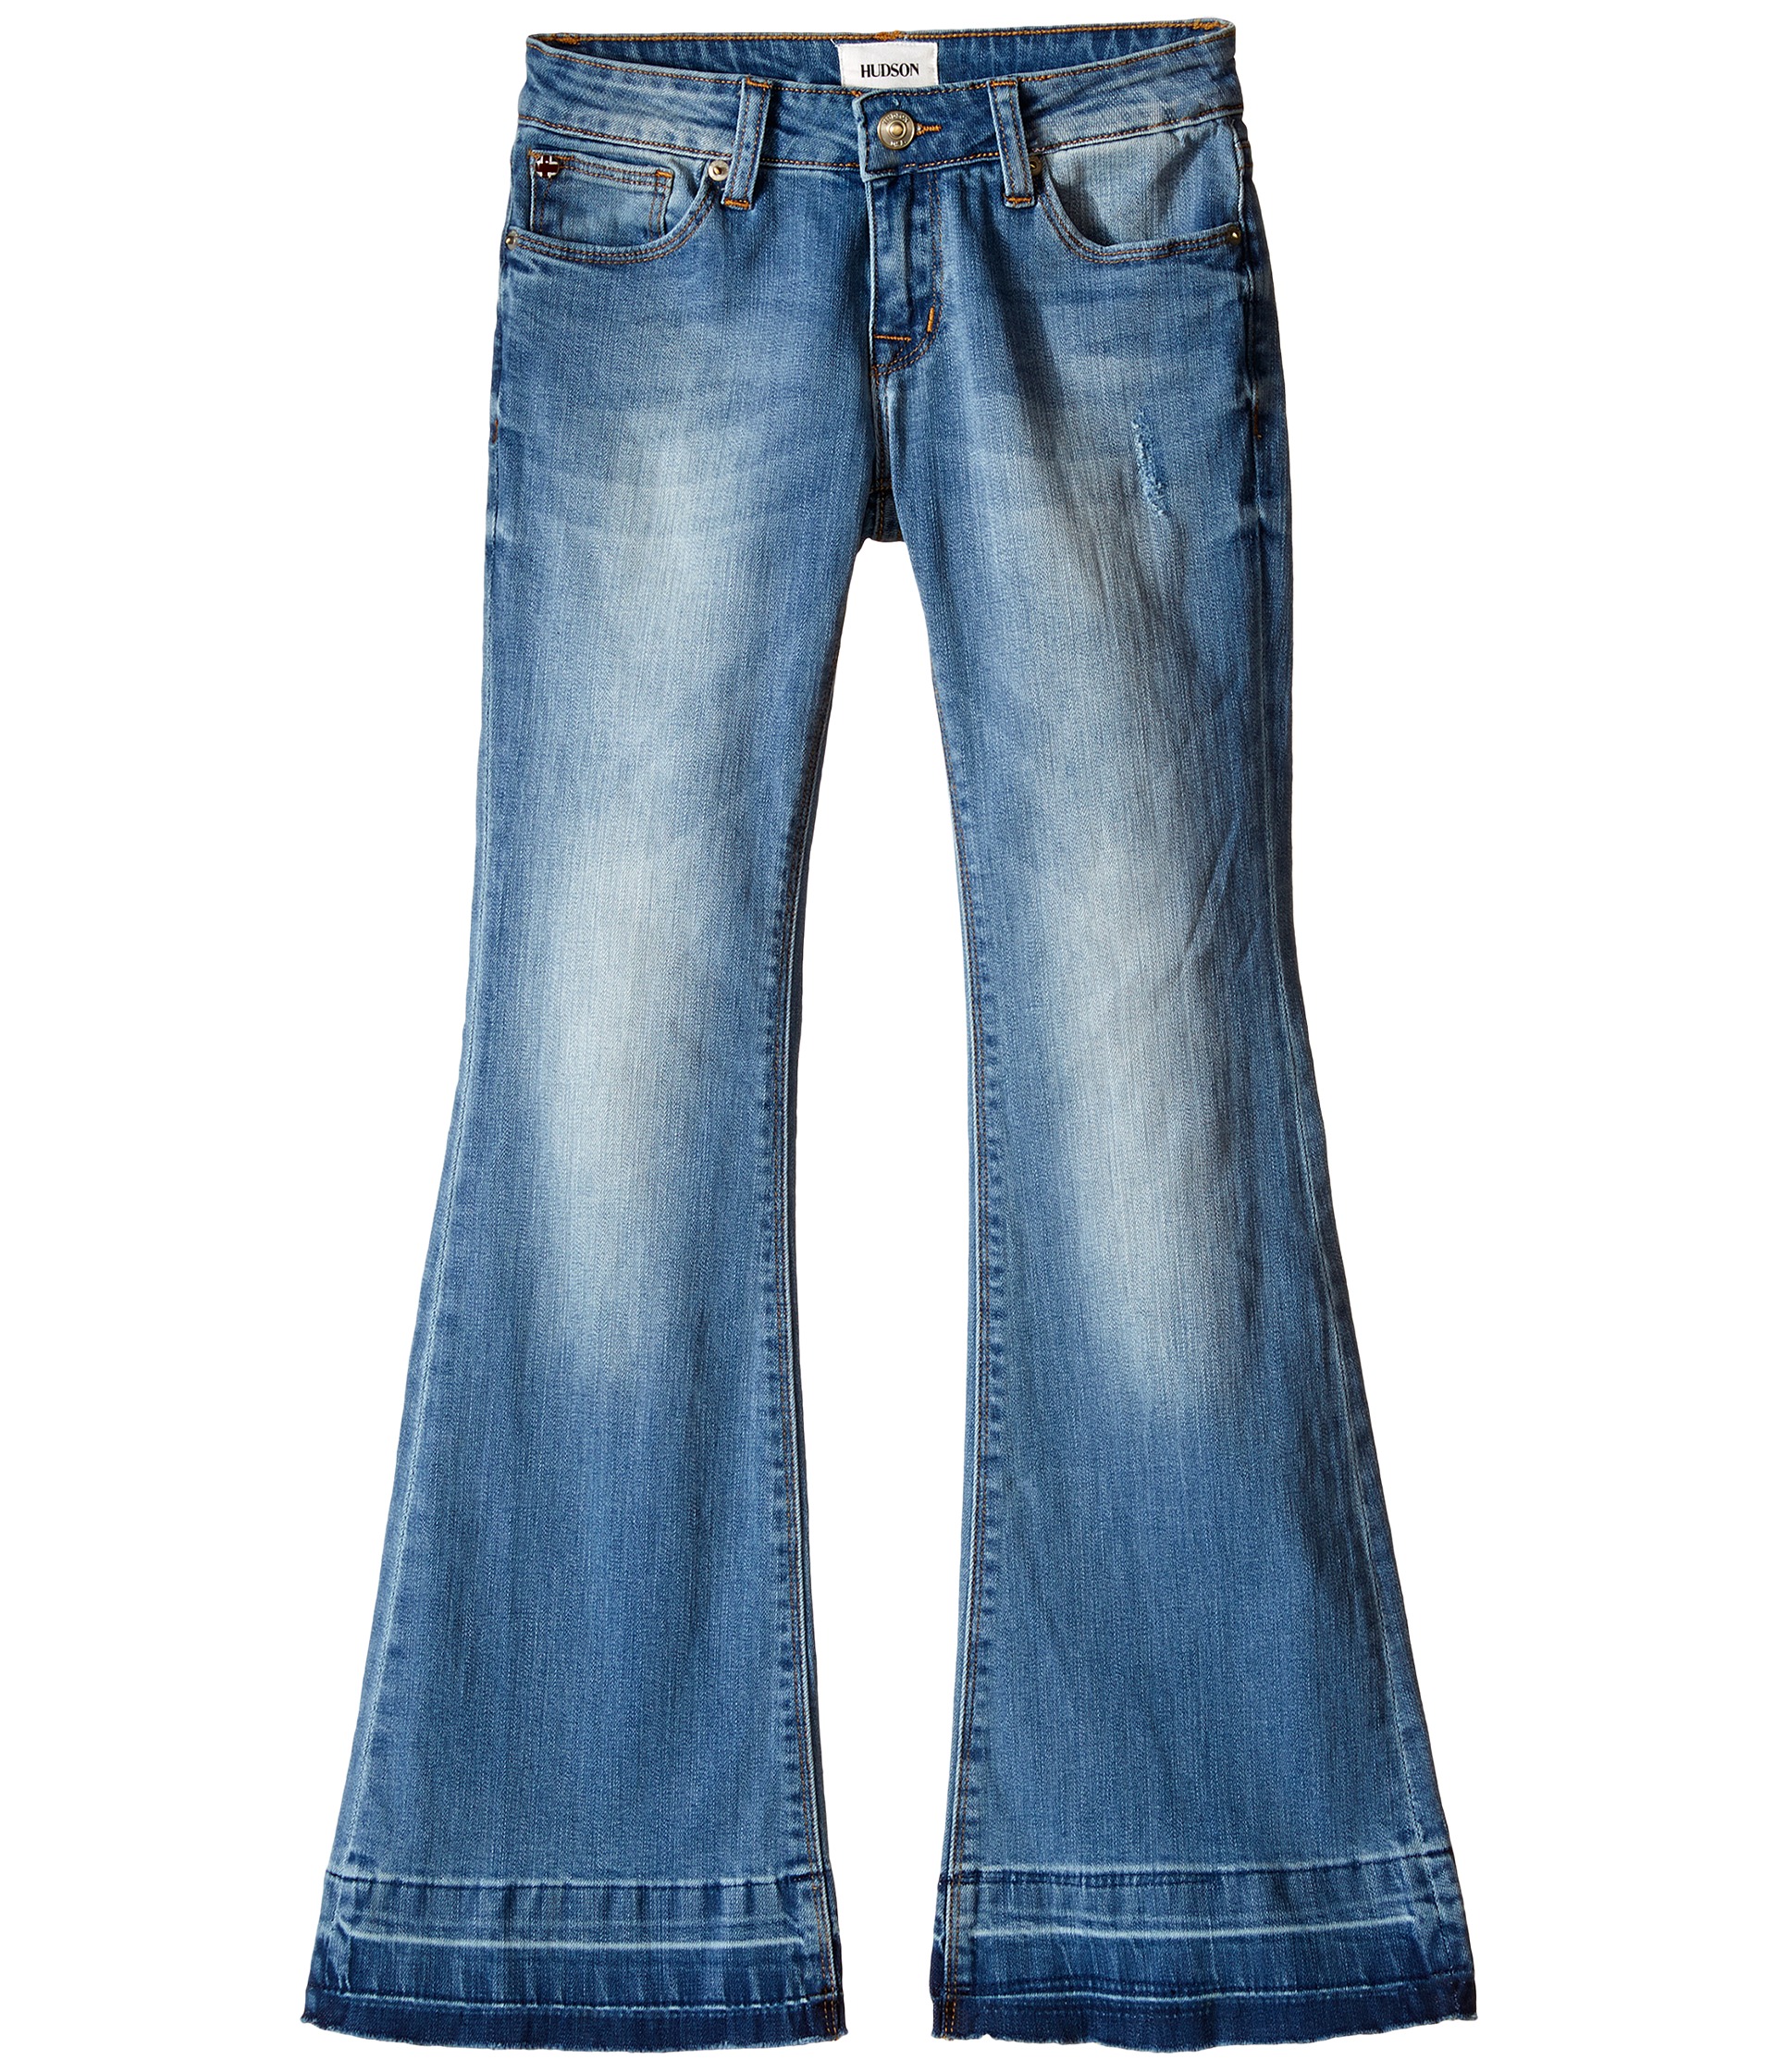 Hudson Kids Janis Flare Jeans in Blue Steel (Big Kids) - Zappos.com ...